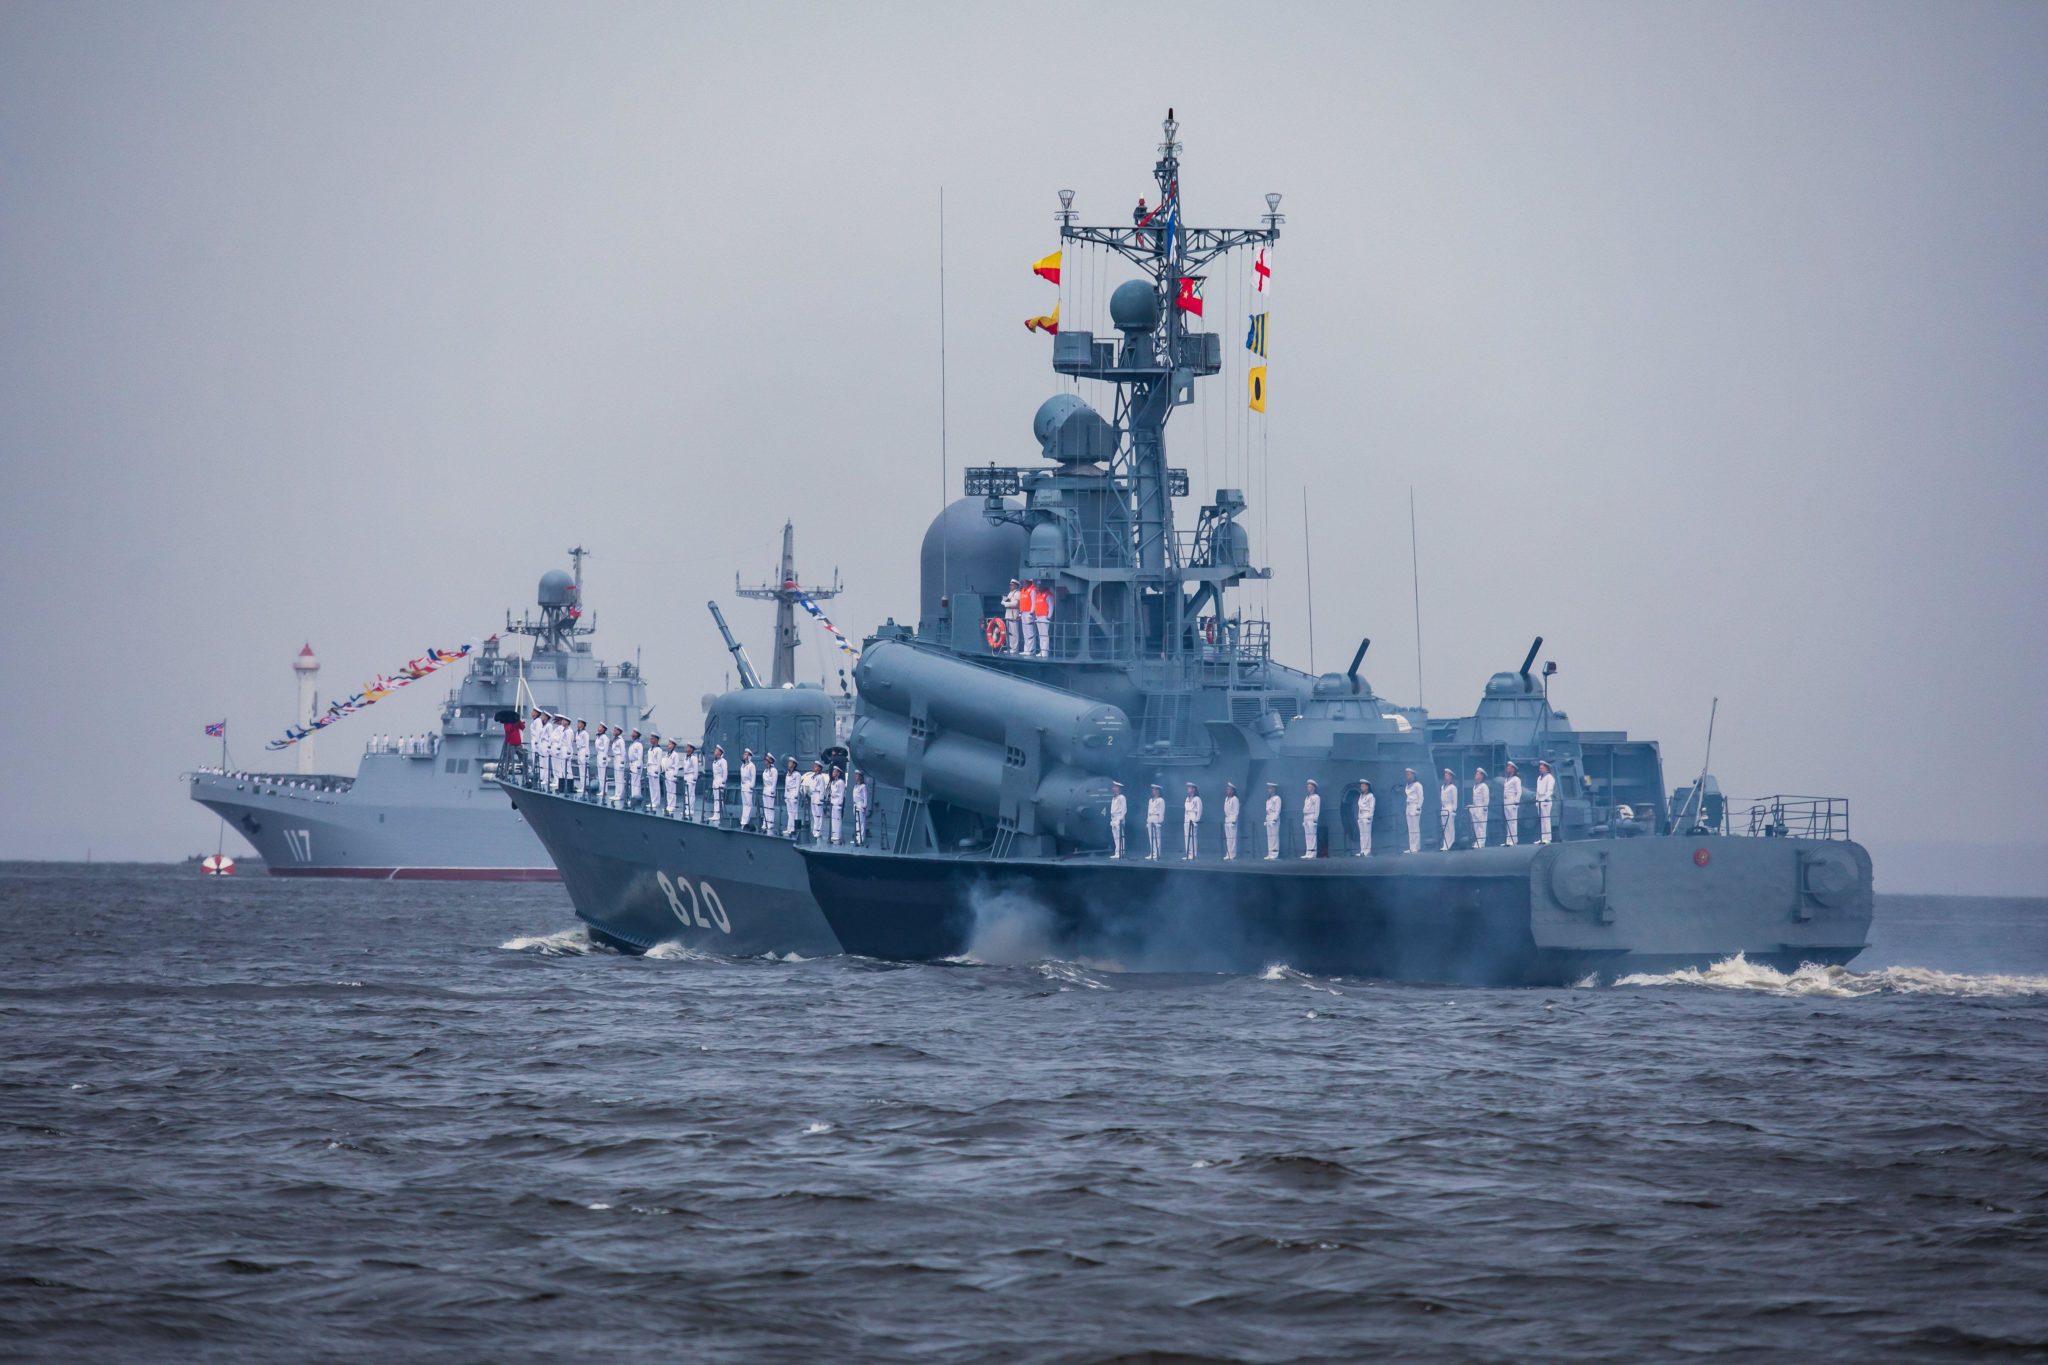 Modern Russian military naval battleships warships in the Baltic Sea.